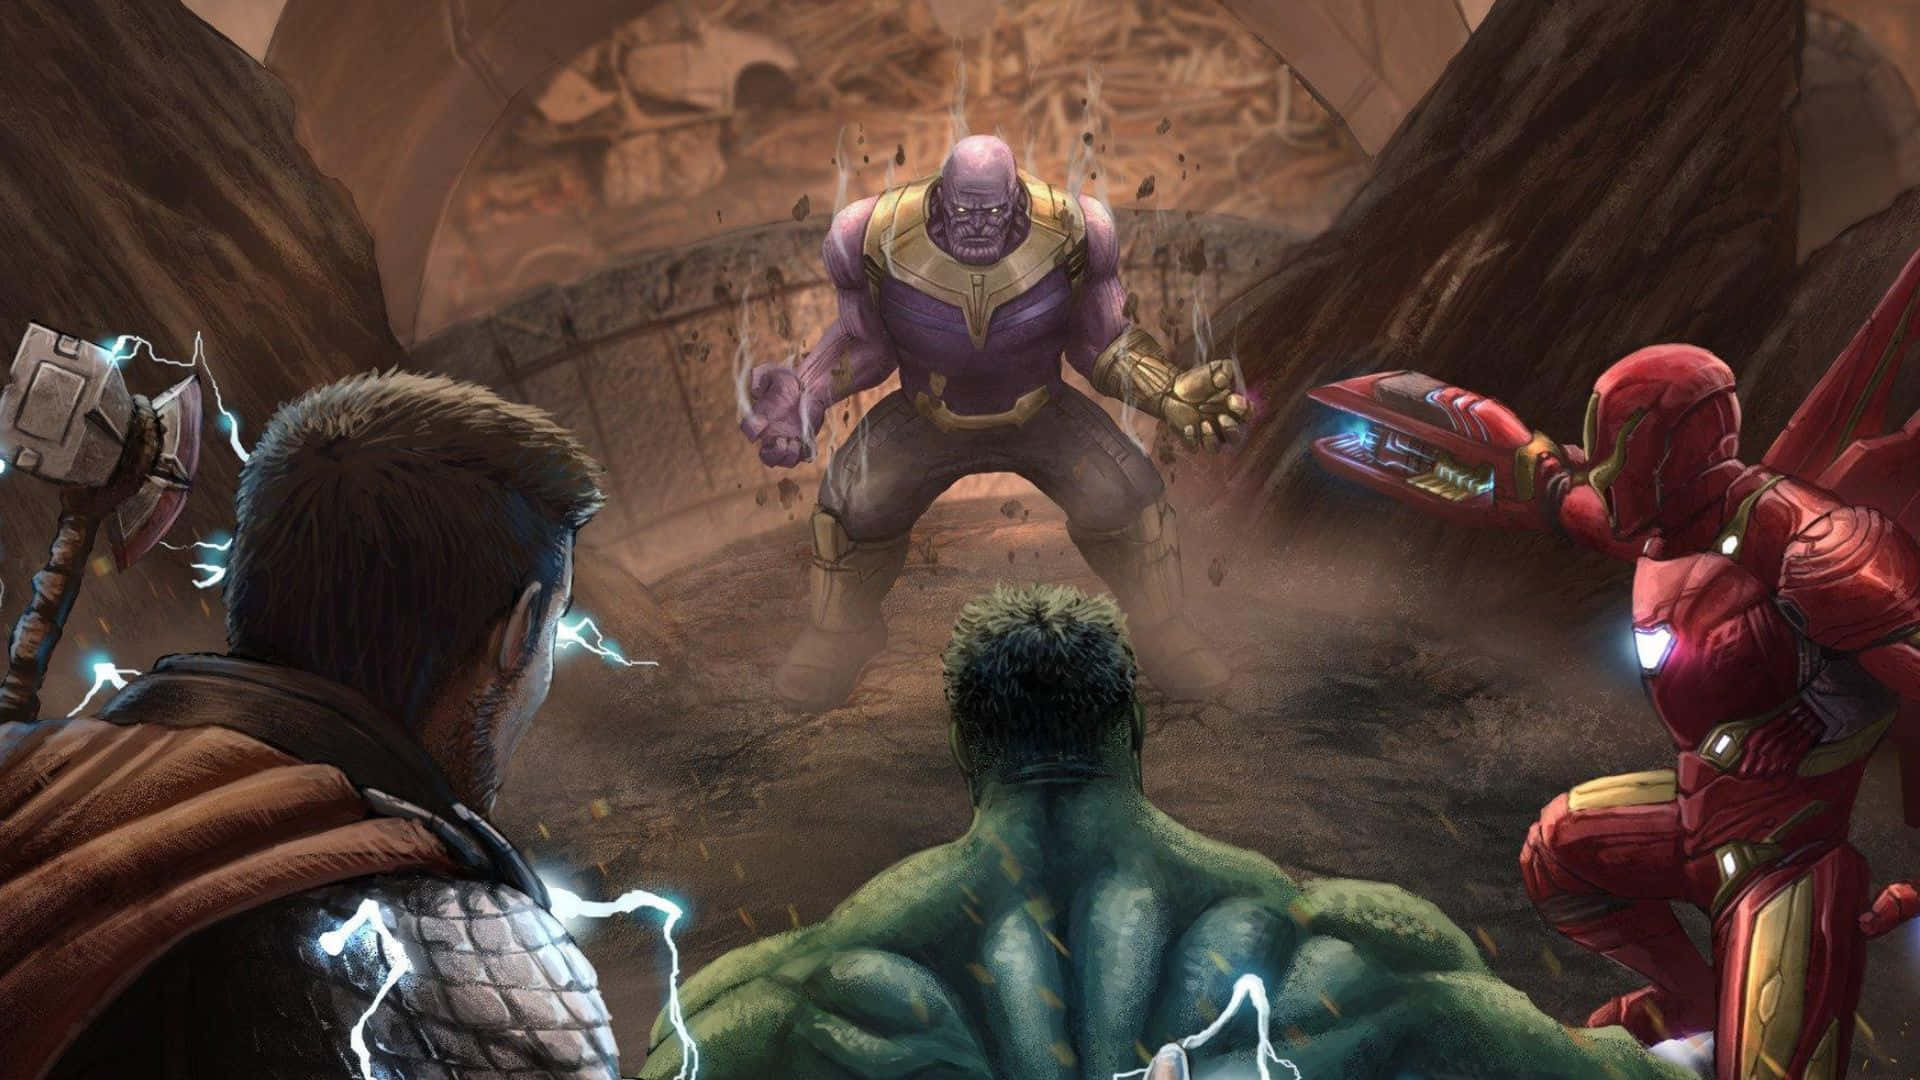 Iron Man battles Thanos to save the universe Wallpaper